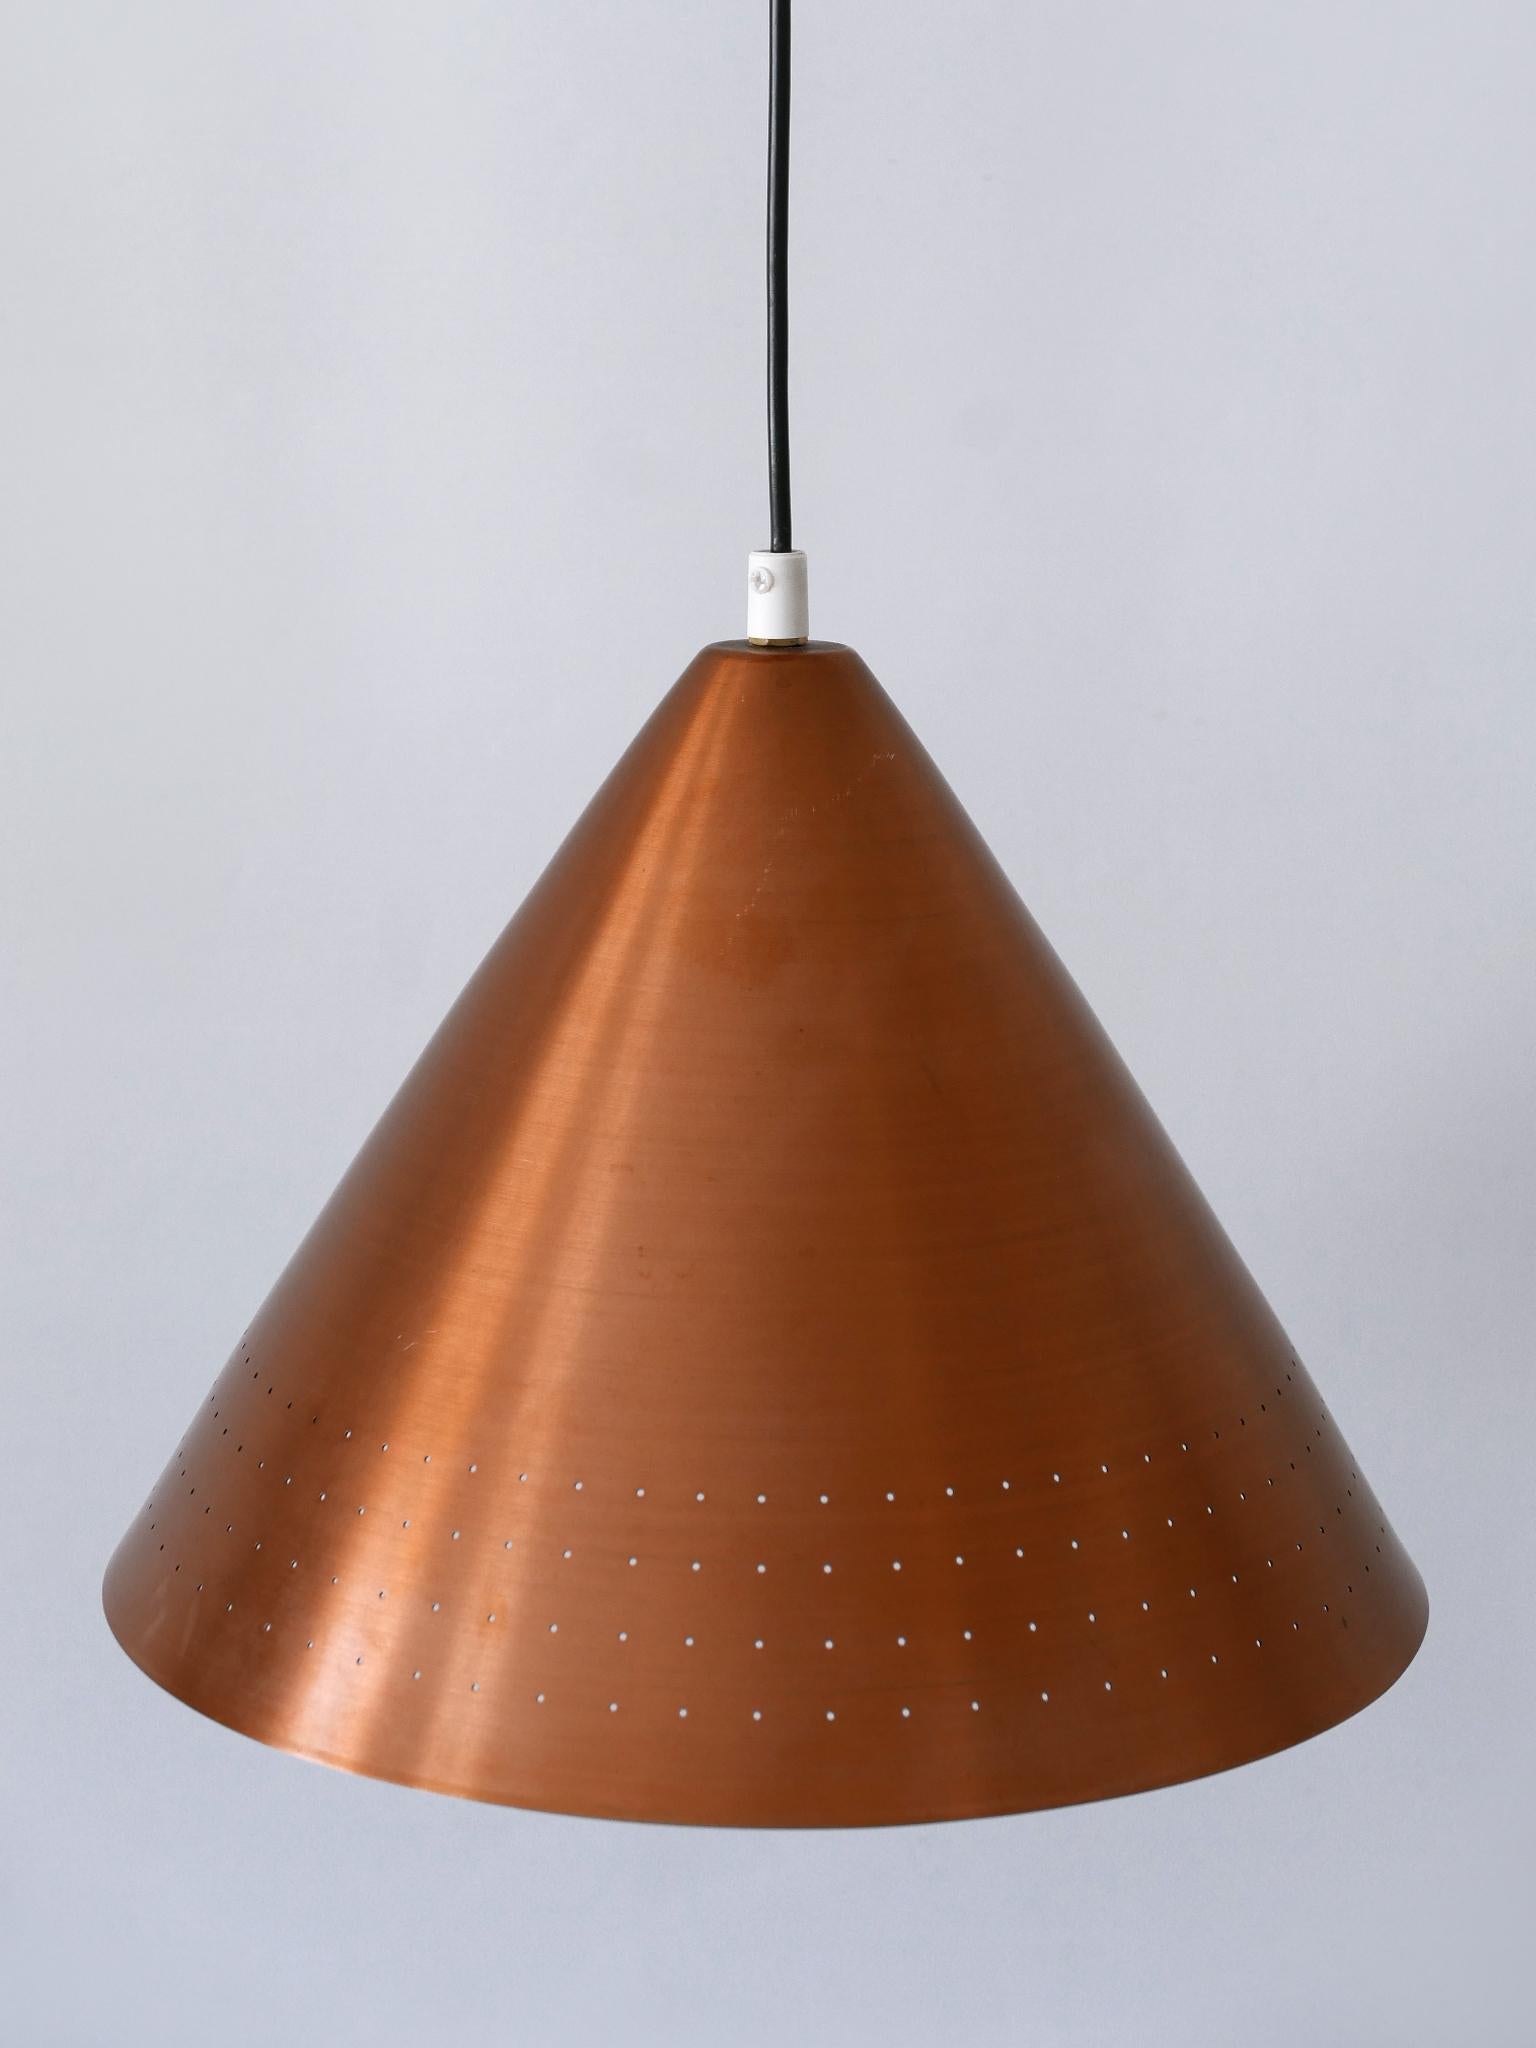 Rare Mid-Century Modern Scandinavian Copper Pendant Lamp or Hanging Light  1960s For Sale 5